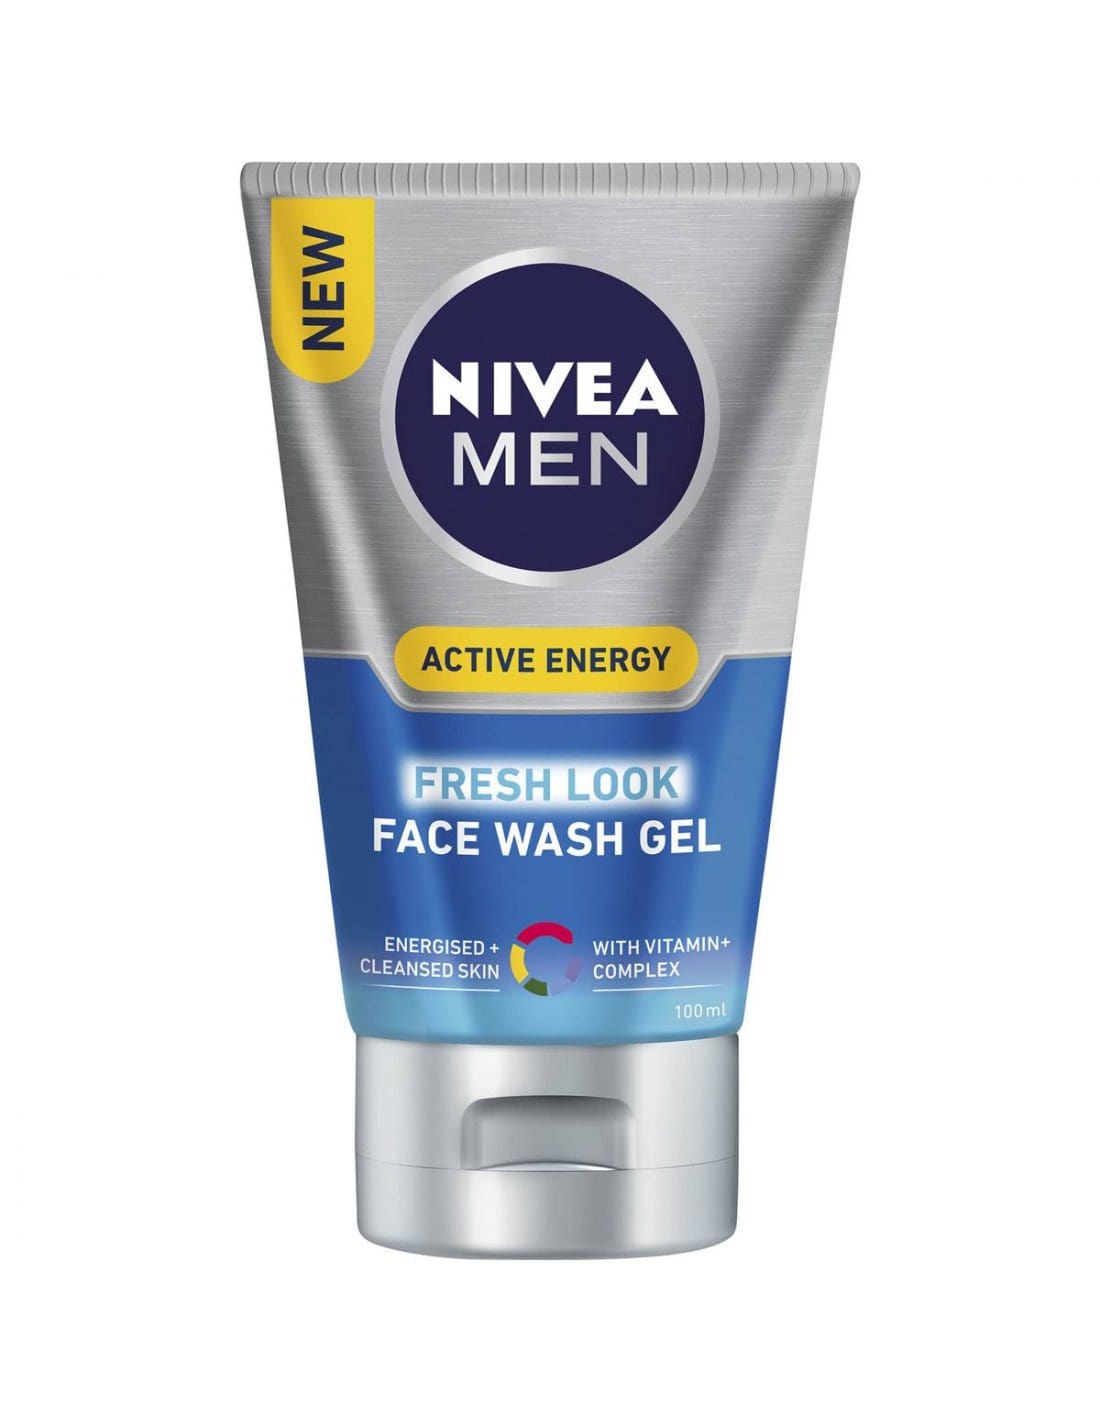 Nivea Toiletries Nivea Men Active Energy Face Wash Gel, 100ml 6001051001743 204039